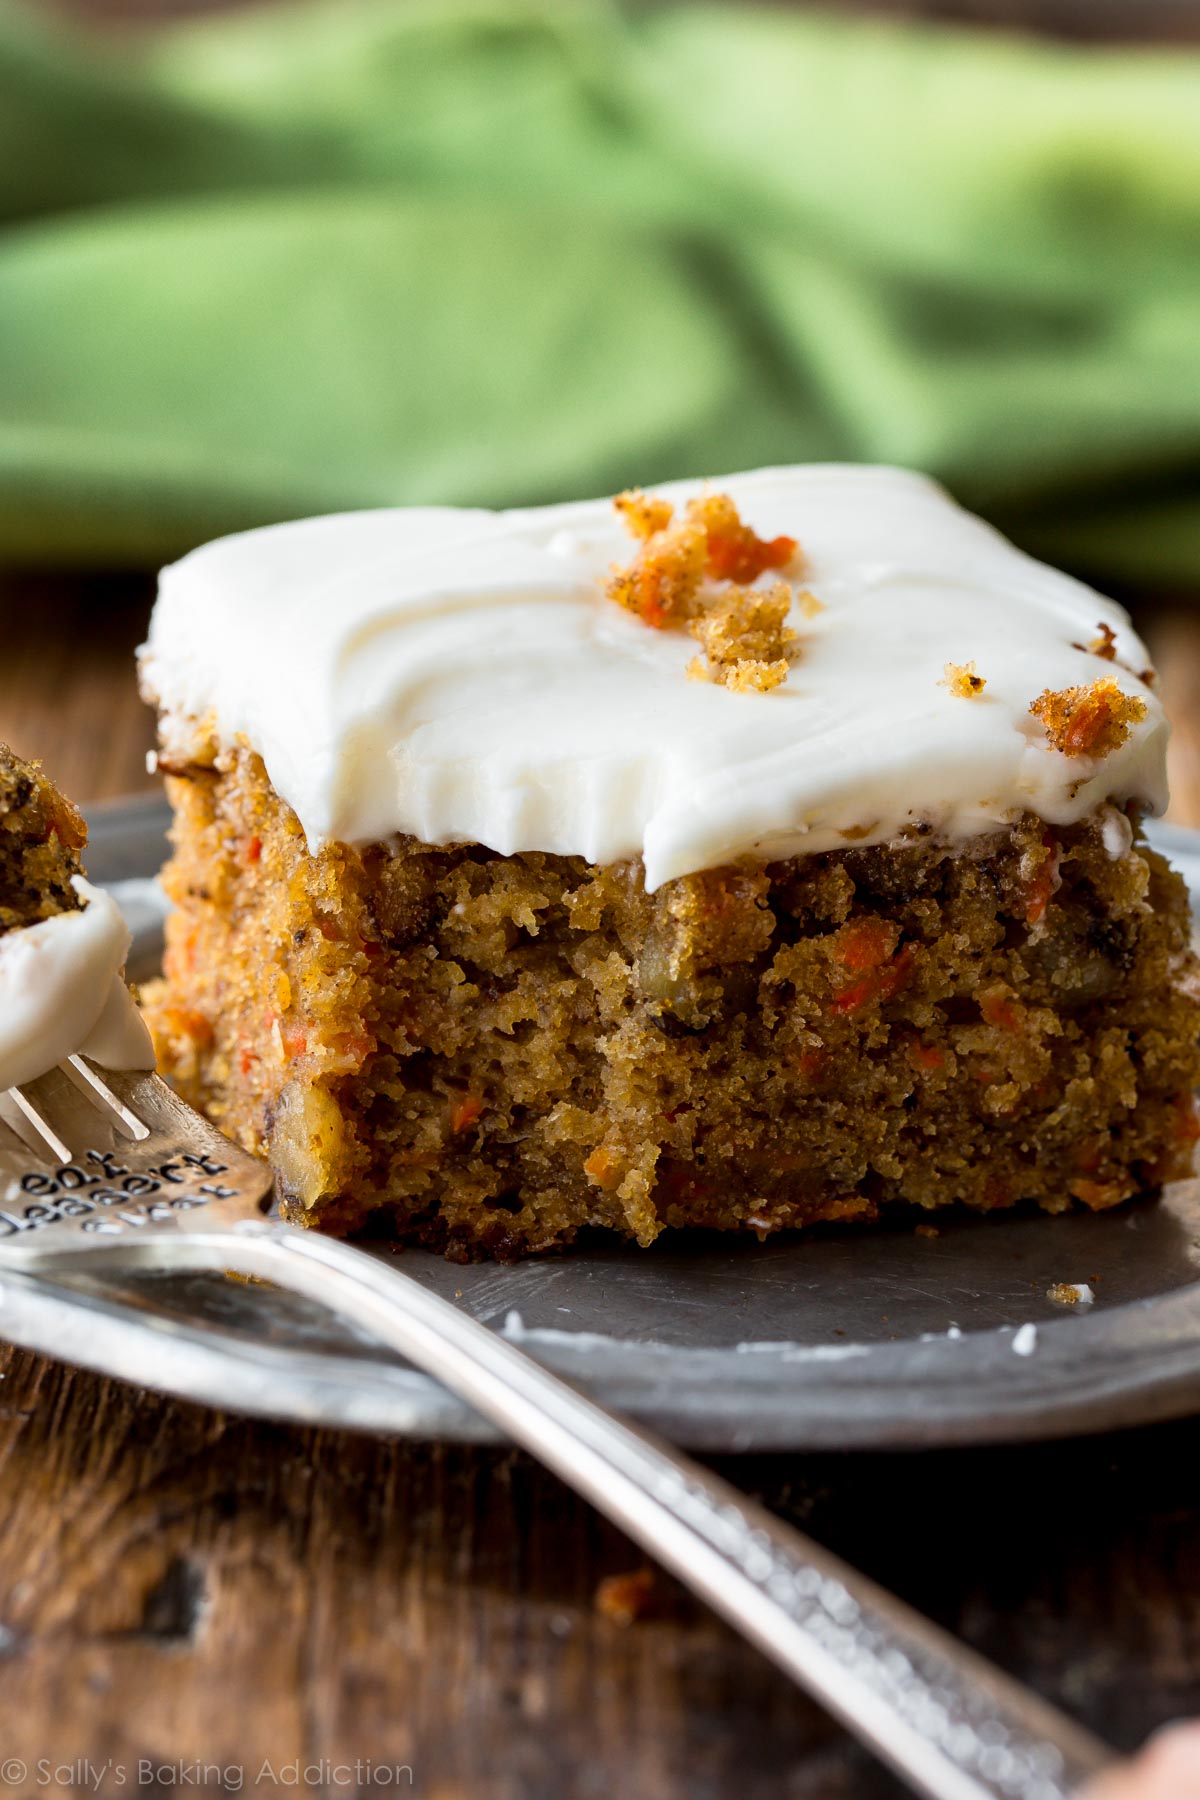 My Favorite Carrot Cake Recipe - Sally's Baking Addiction